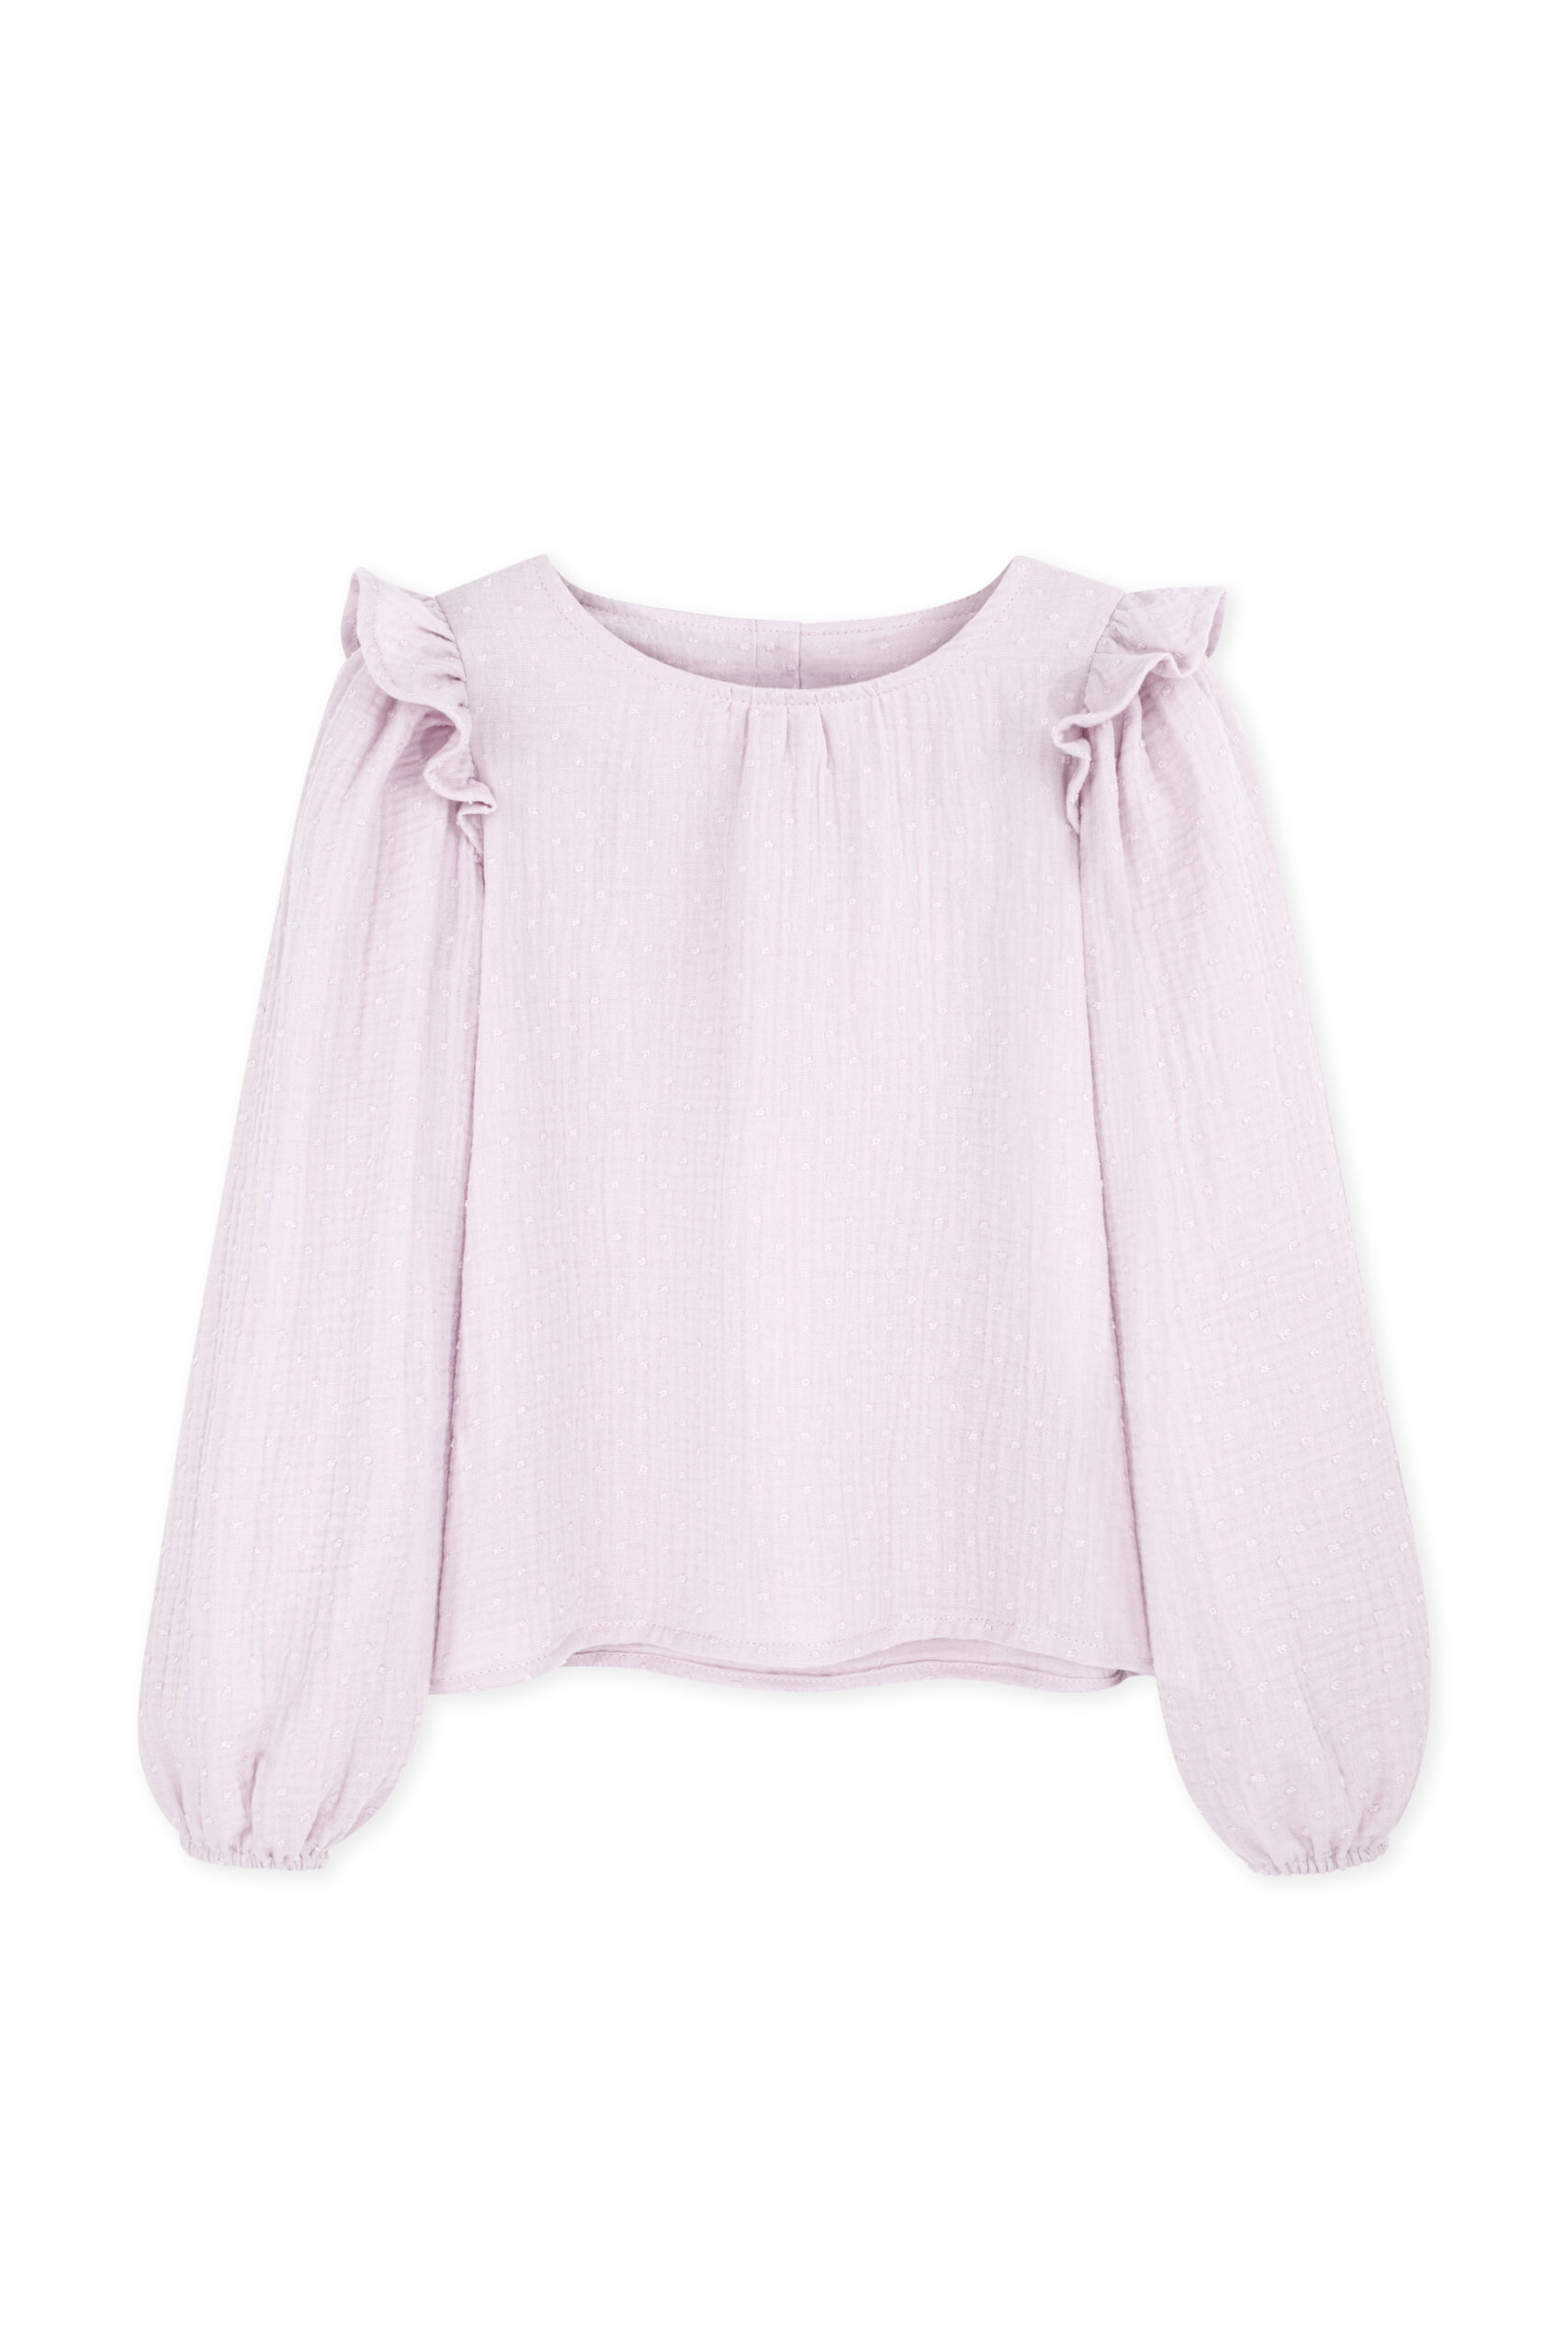 muślinowa bluzka, różowa bluzka, dla dzieci, bluzka z falbankami, organic cotton blouse, rose blouse, for kids